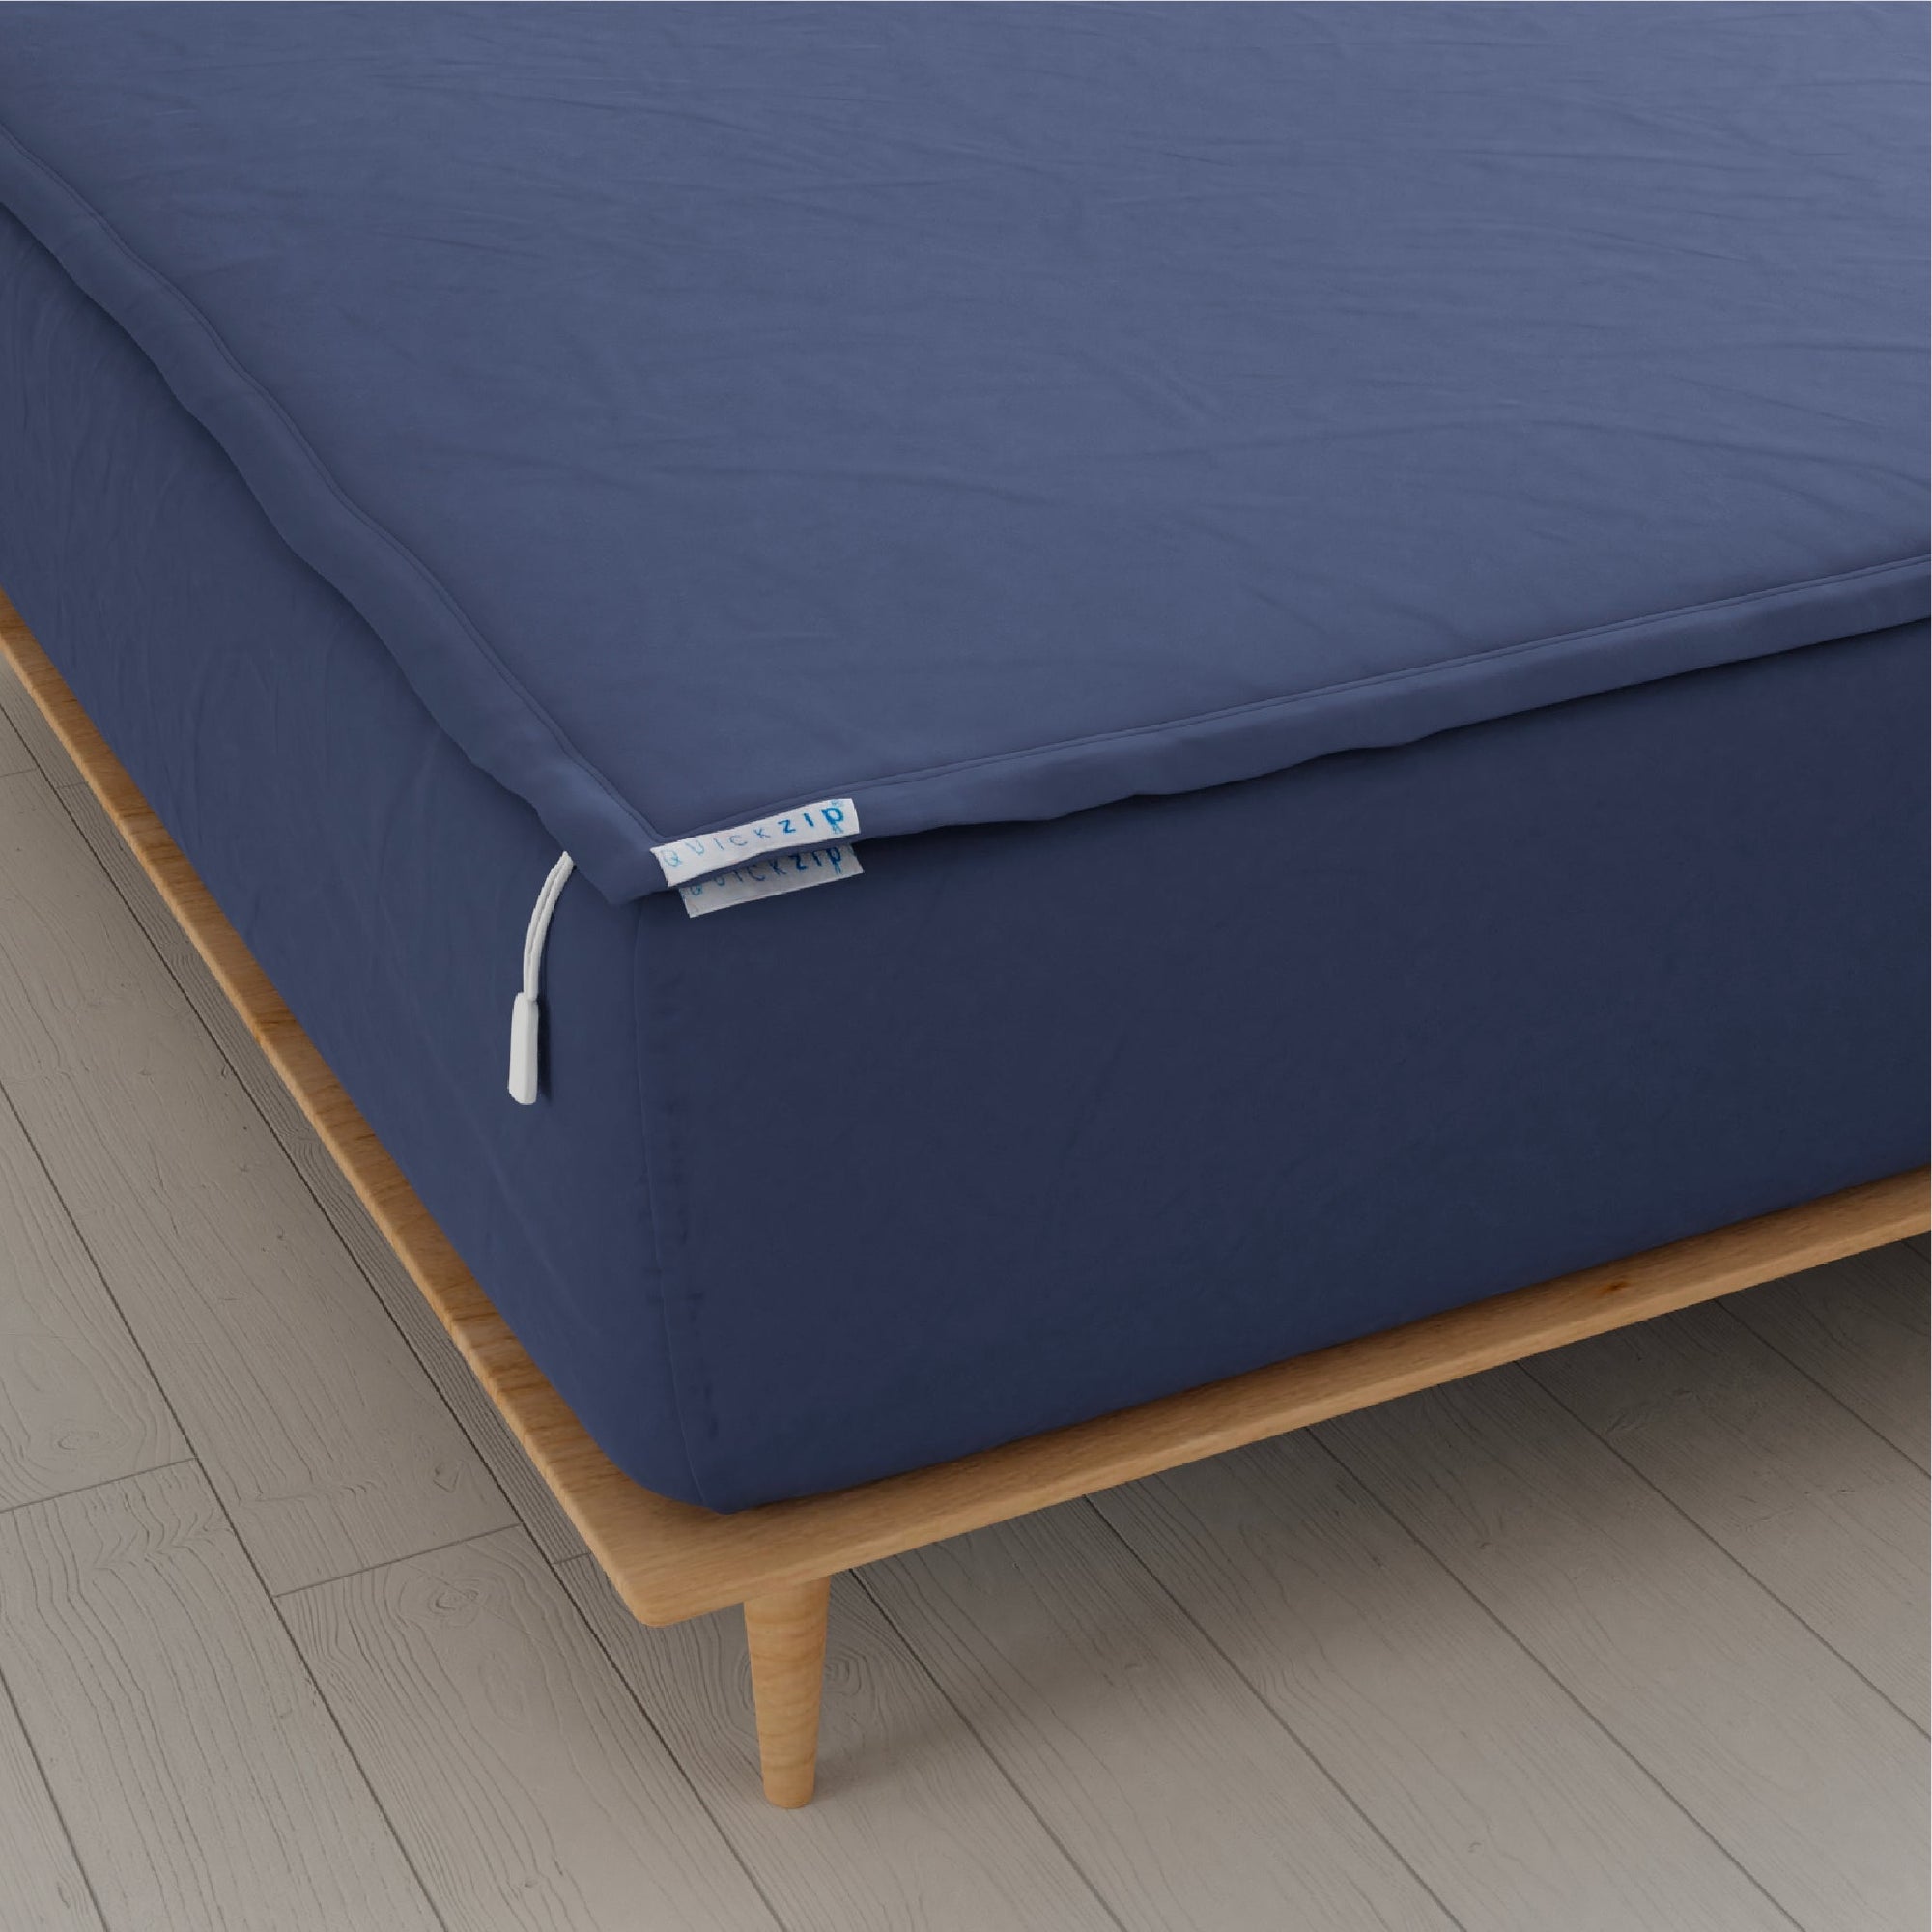 QuickZip Sheet Company  Smarter, Faster, & Easier Bedding